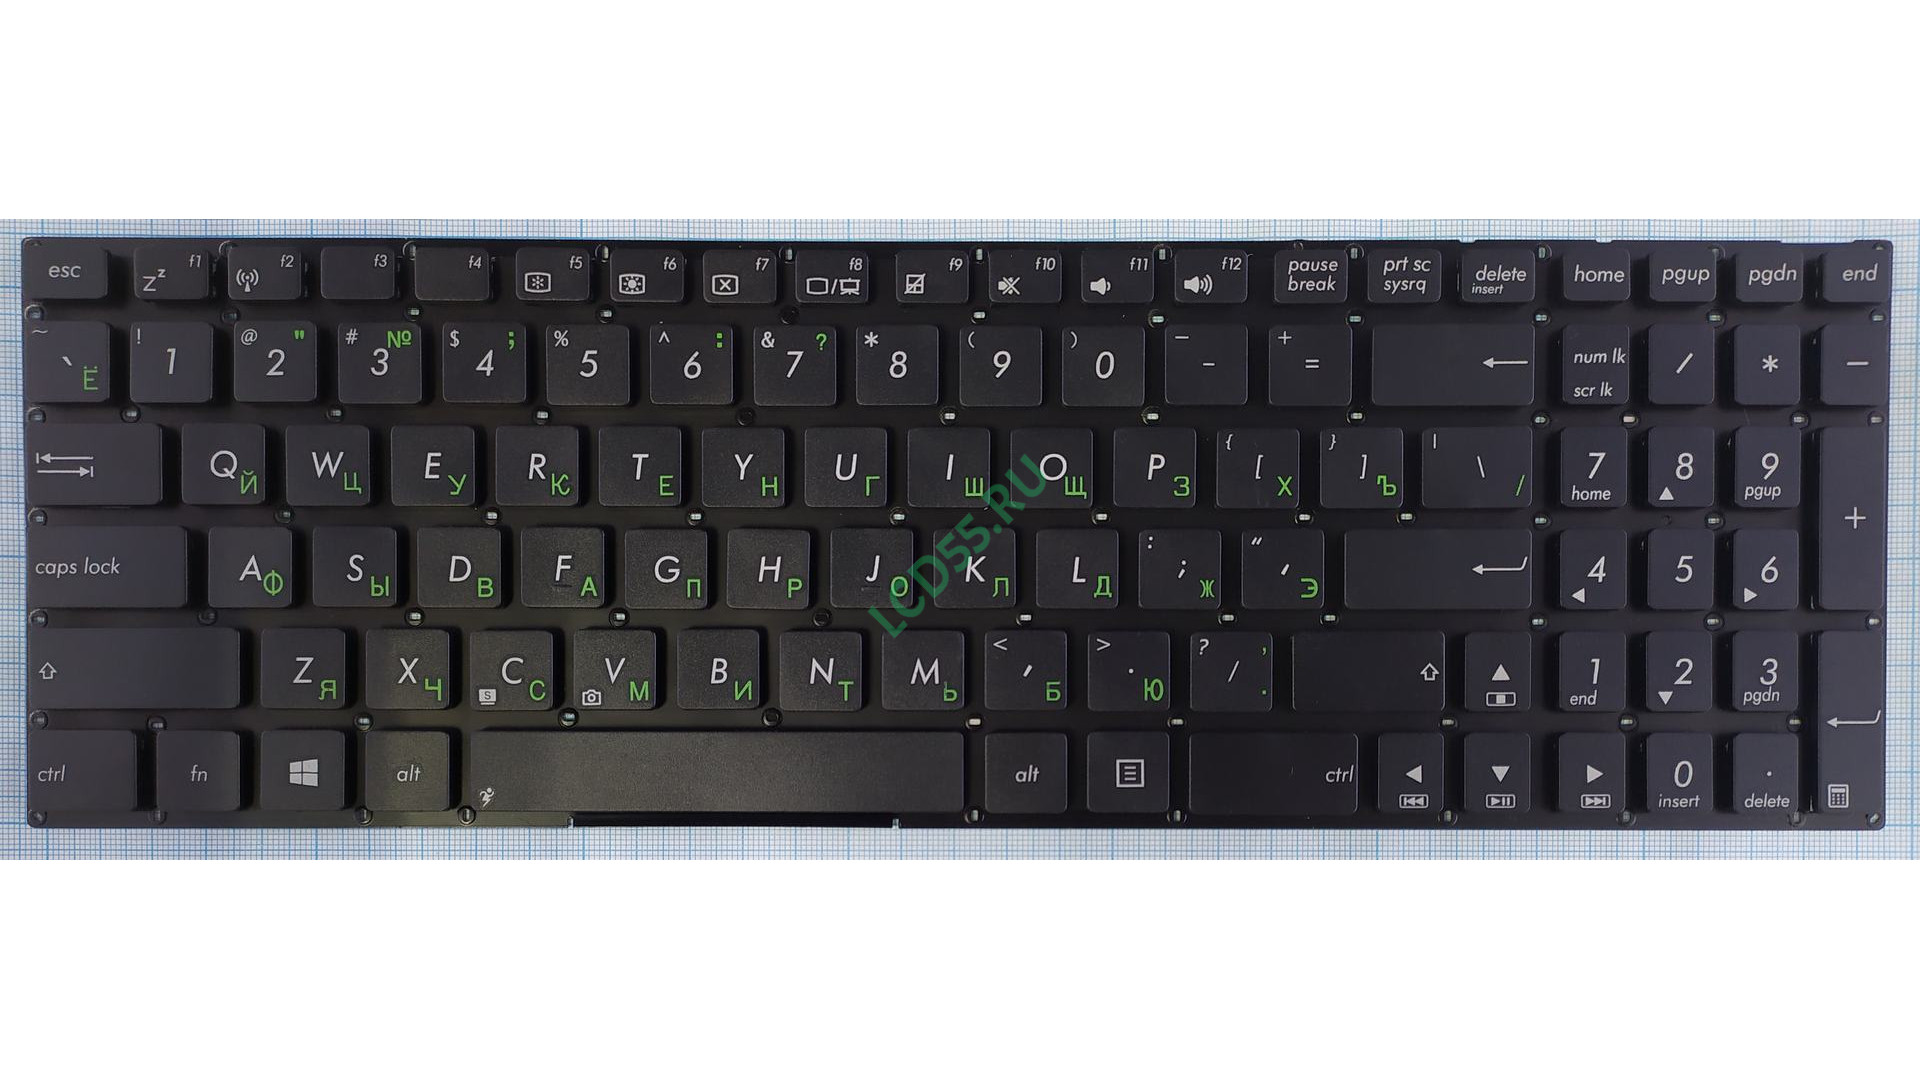 Клавиатура Asus X551C, X551M, R512M, R512MA (0KNB0-612BRU00) черная